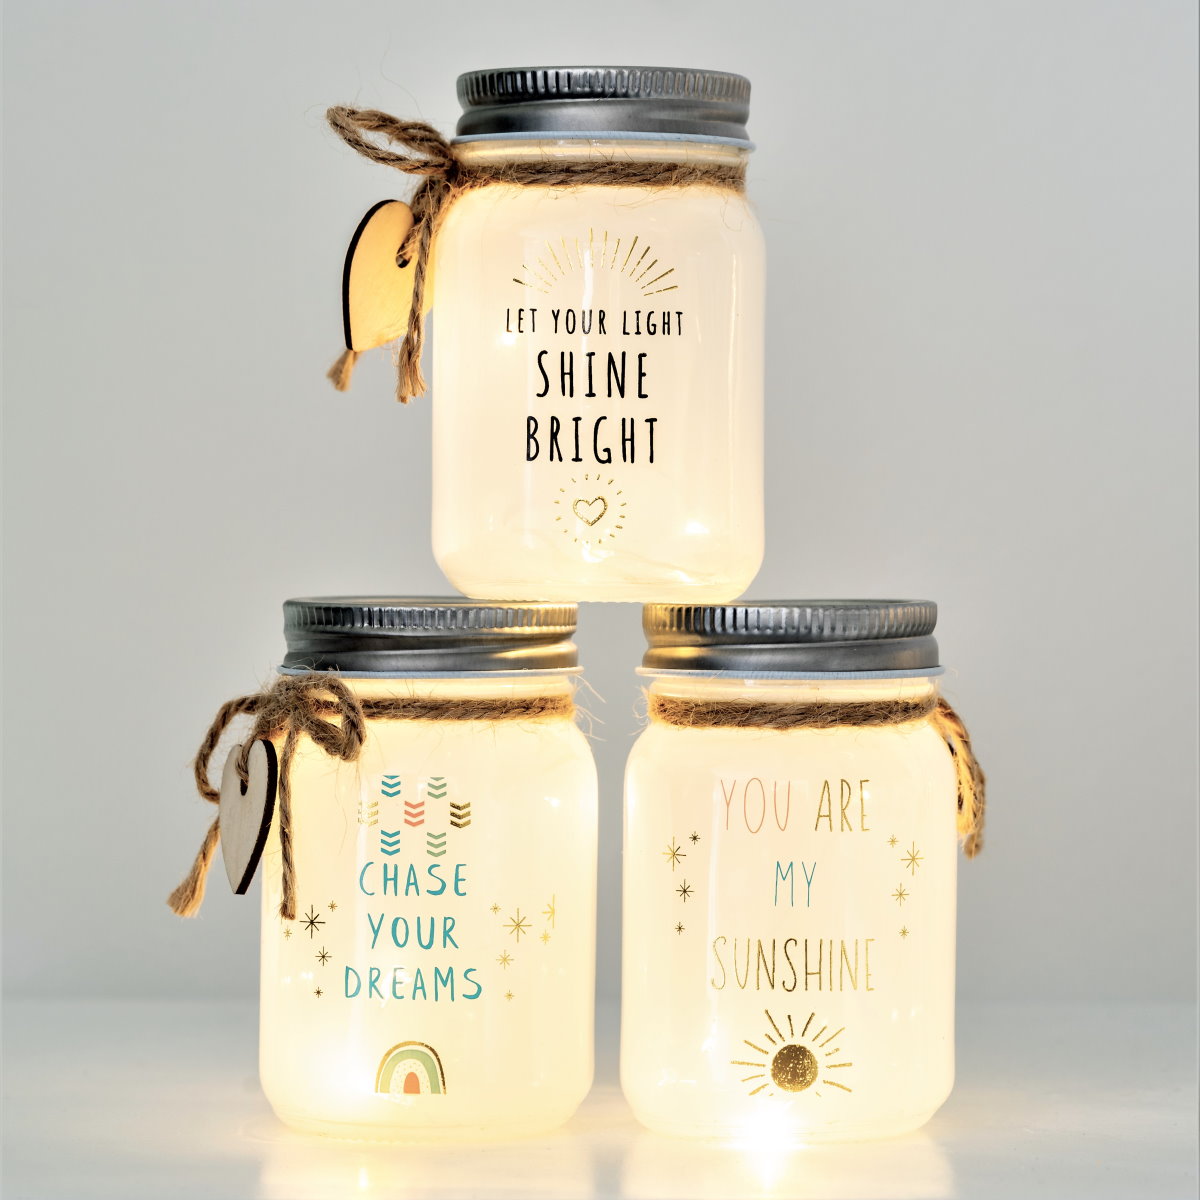 mini message sparkle jar - let your light shine bright - Snug as a Bug